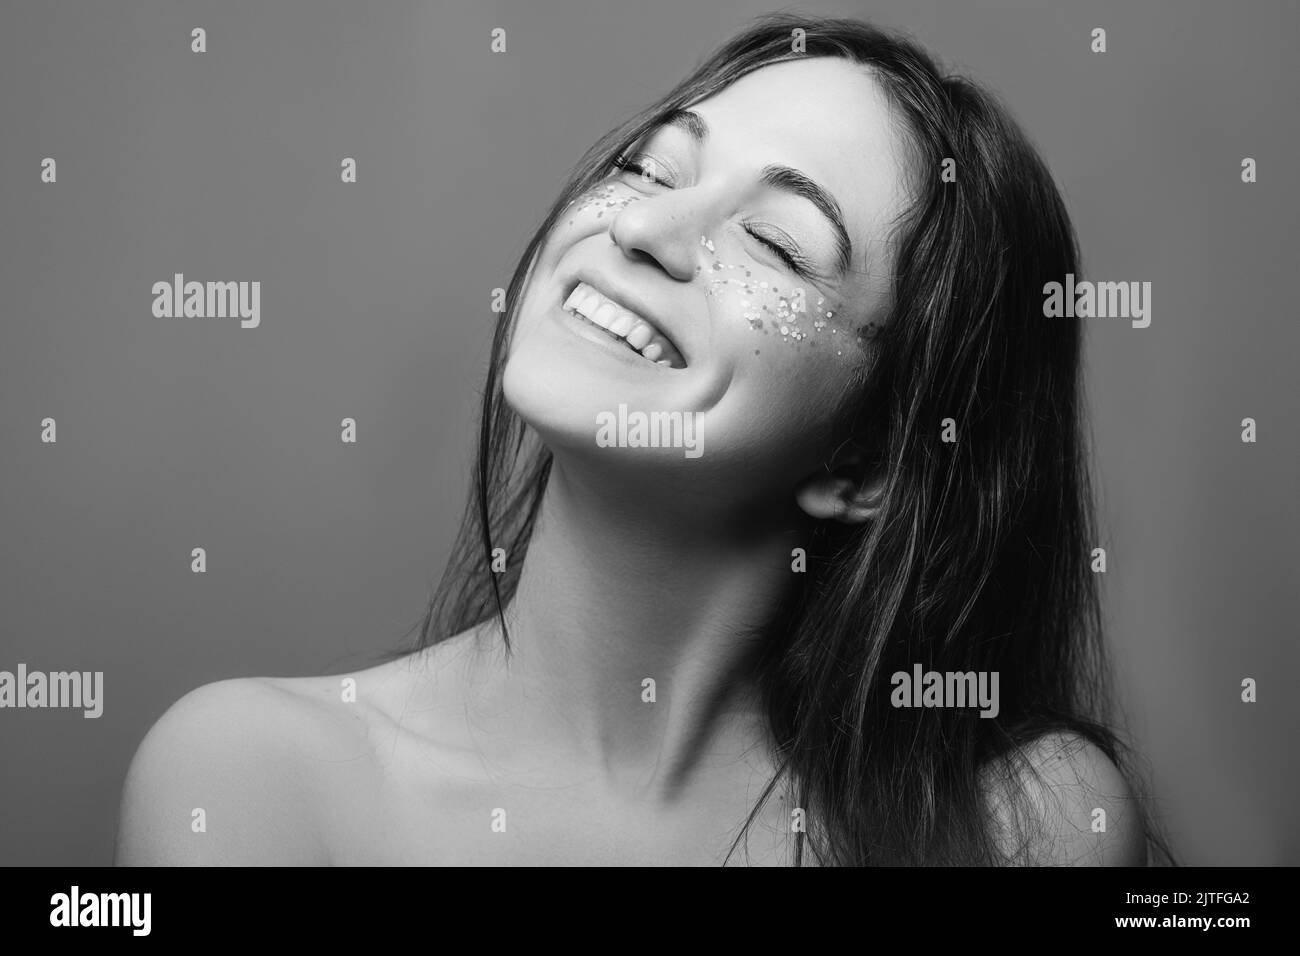 giovane donna bellezza pelle fresca sorriso toothy Foto Stock